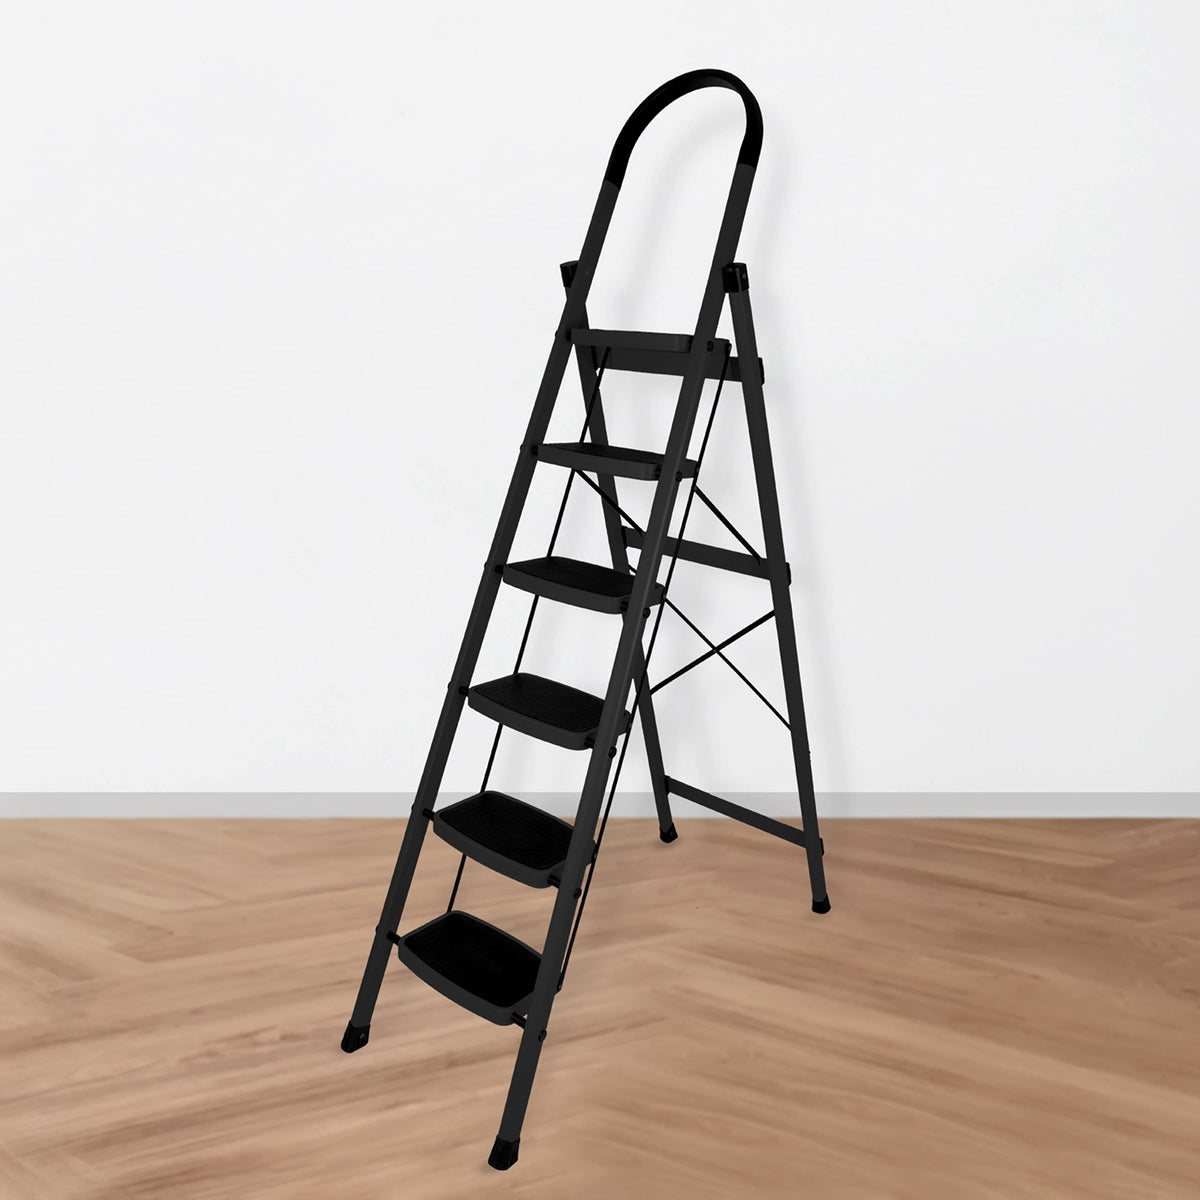 Primax Steel Foldable 6-Step Ladder for Home - Wide Anti Skid Step Ladder (Black)